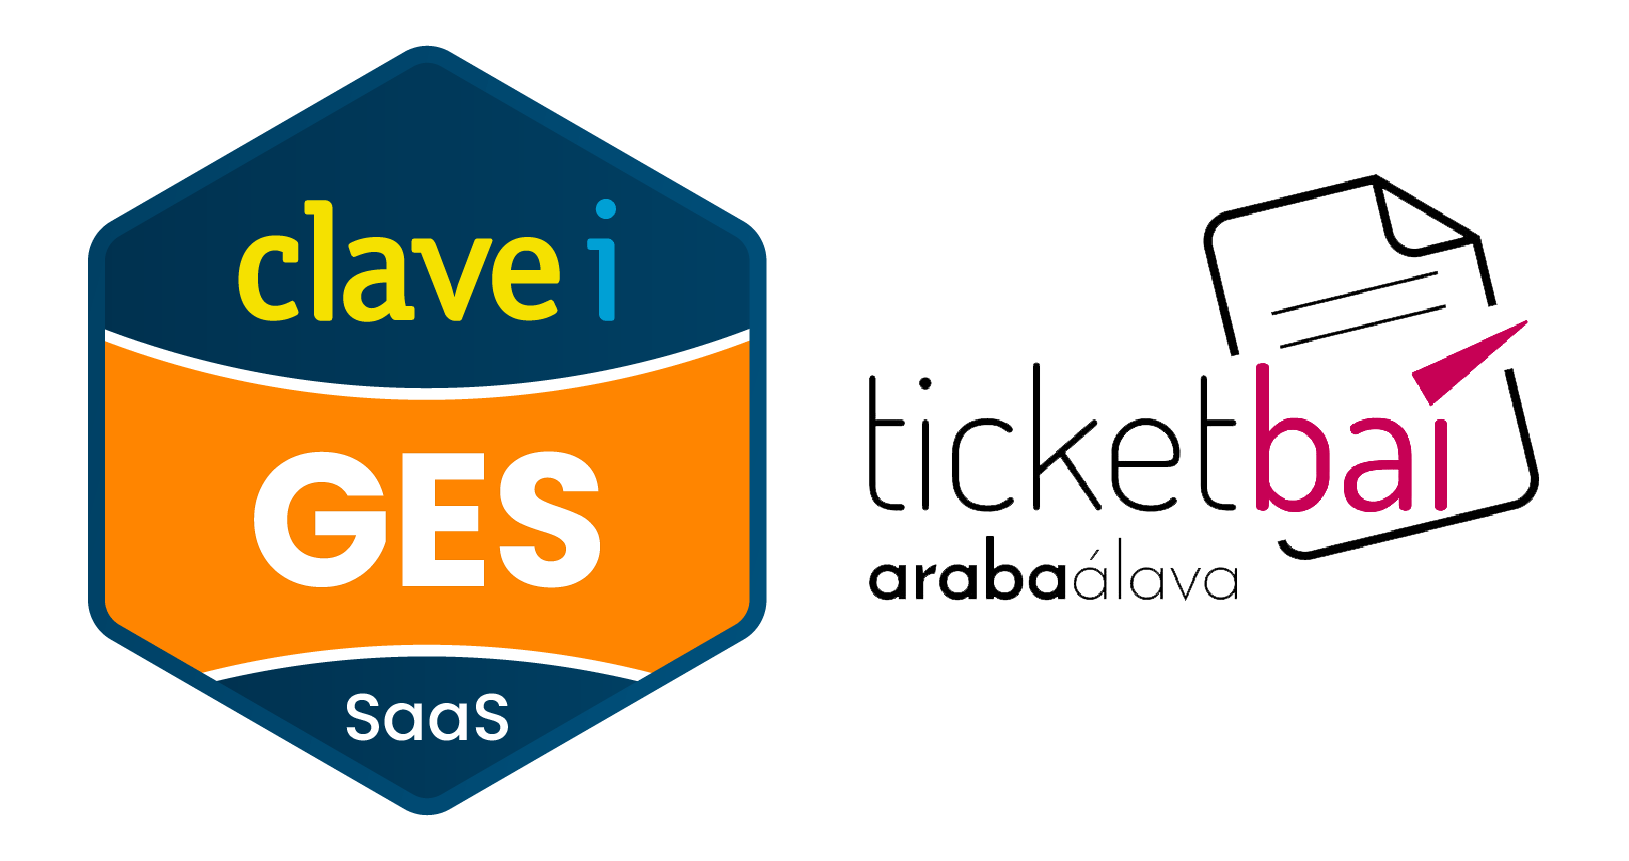 Claveiges-ticketbai